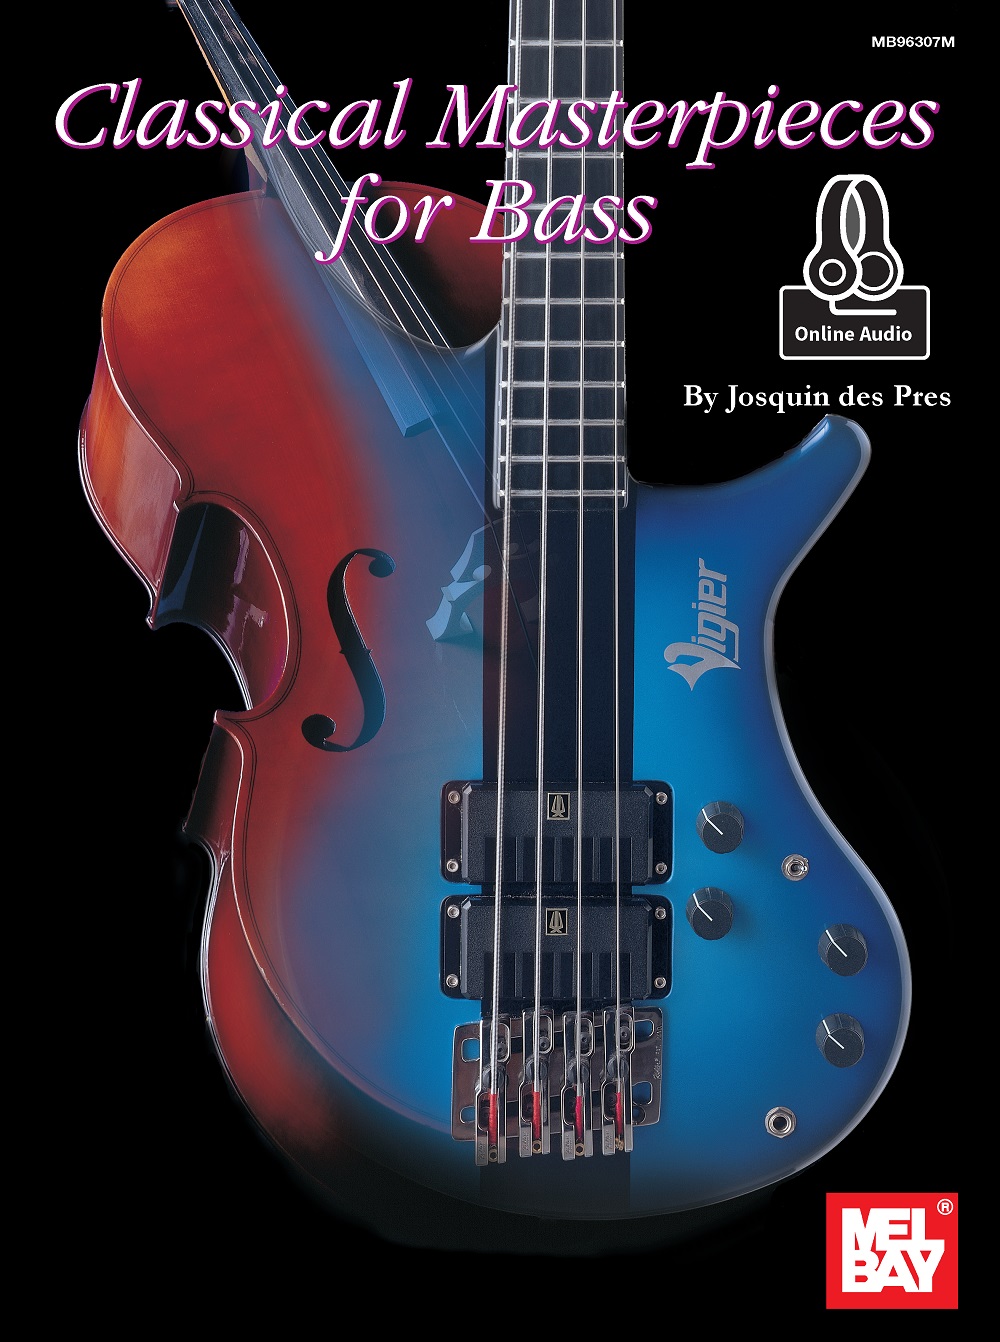 Josquin des Prés: Classical Masterpieces For Bass Book: Bass Guitar: